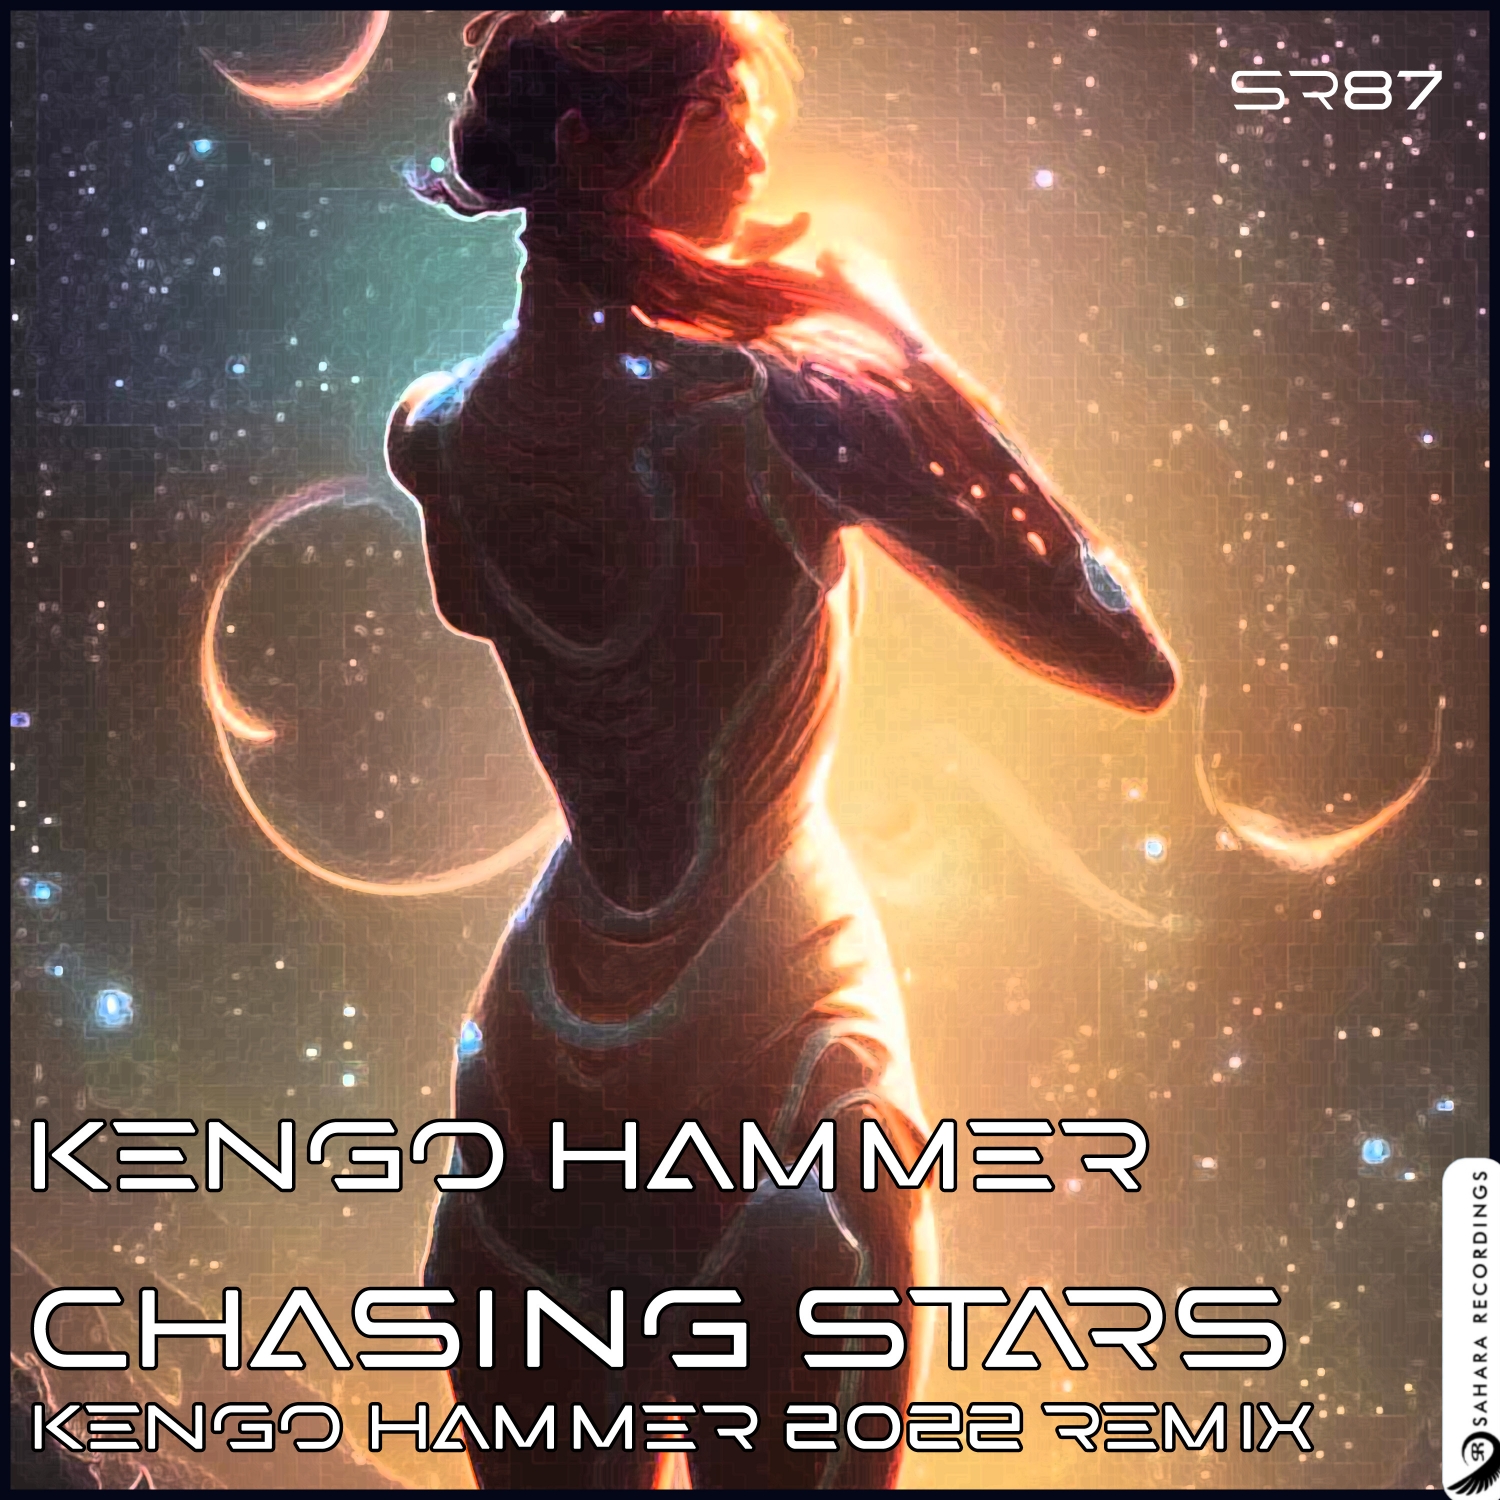 Kengo Hammer presents Chasing Stars (Kengo Hammer 2022 Remix) on Sahara Recordings